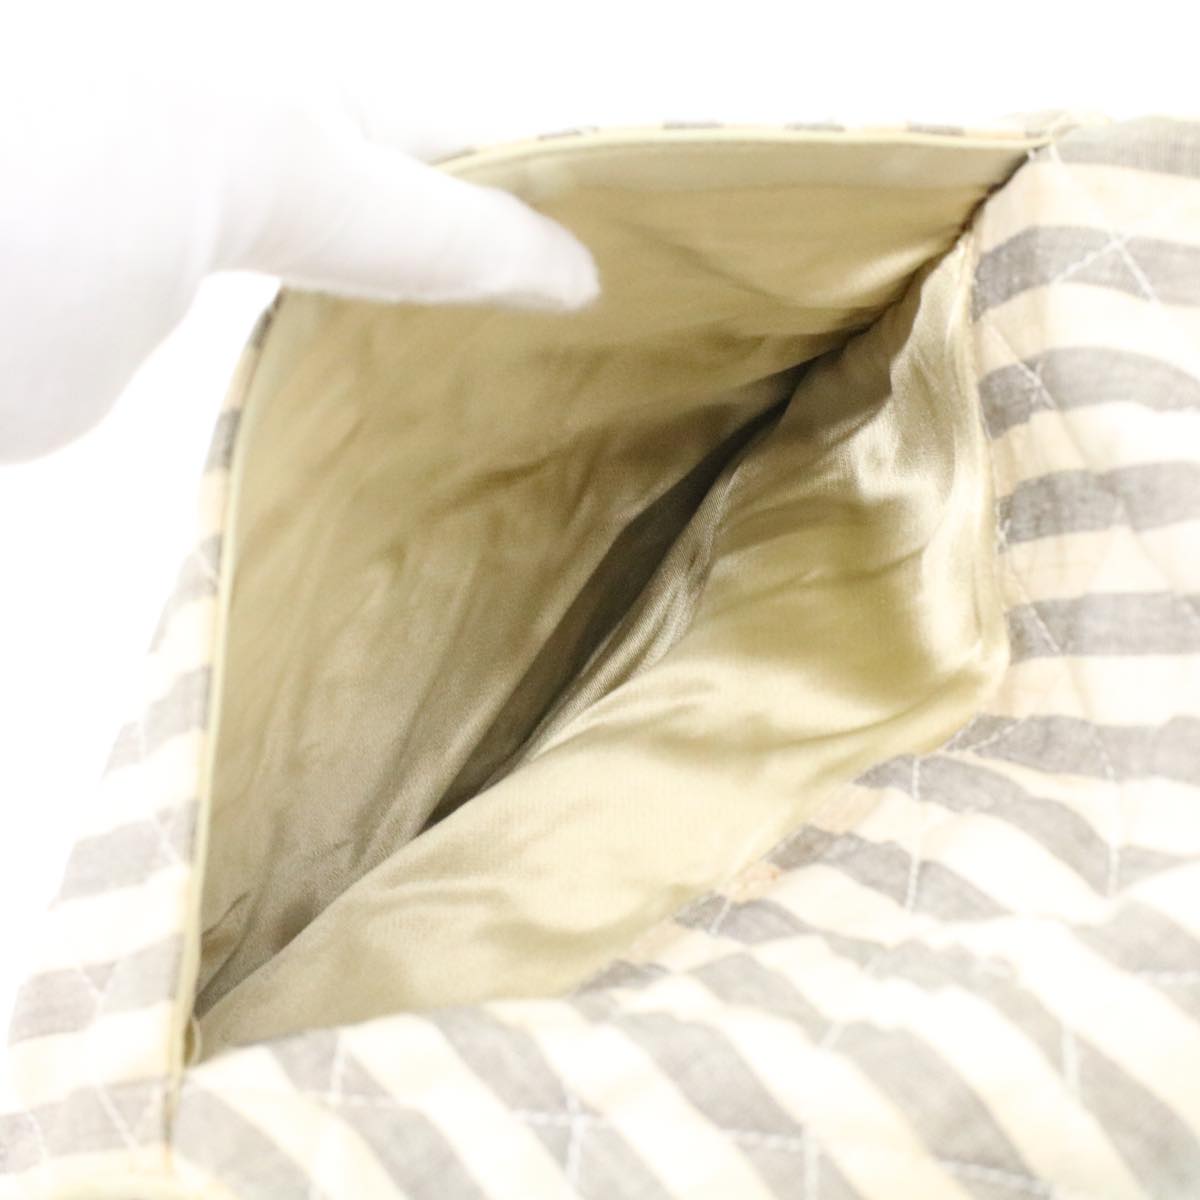 CHANEL Striped Matelasse Chain Shoulder Bag Canvas White Gray CC Auth bs3642